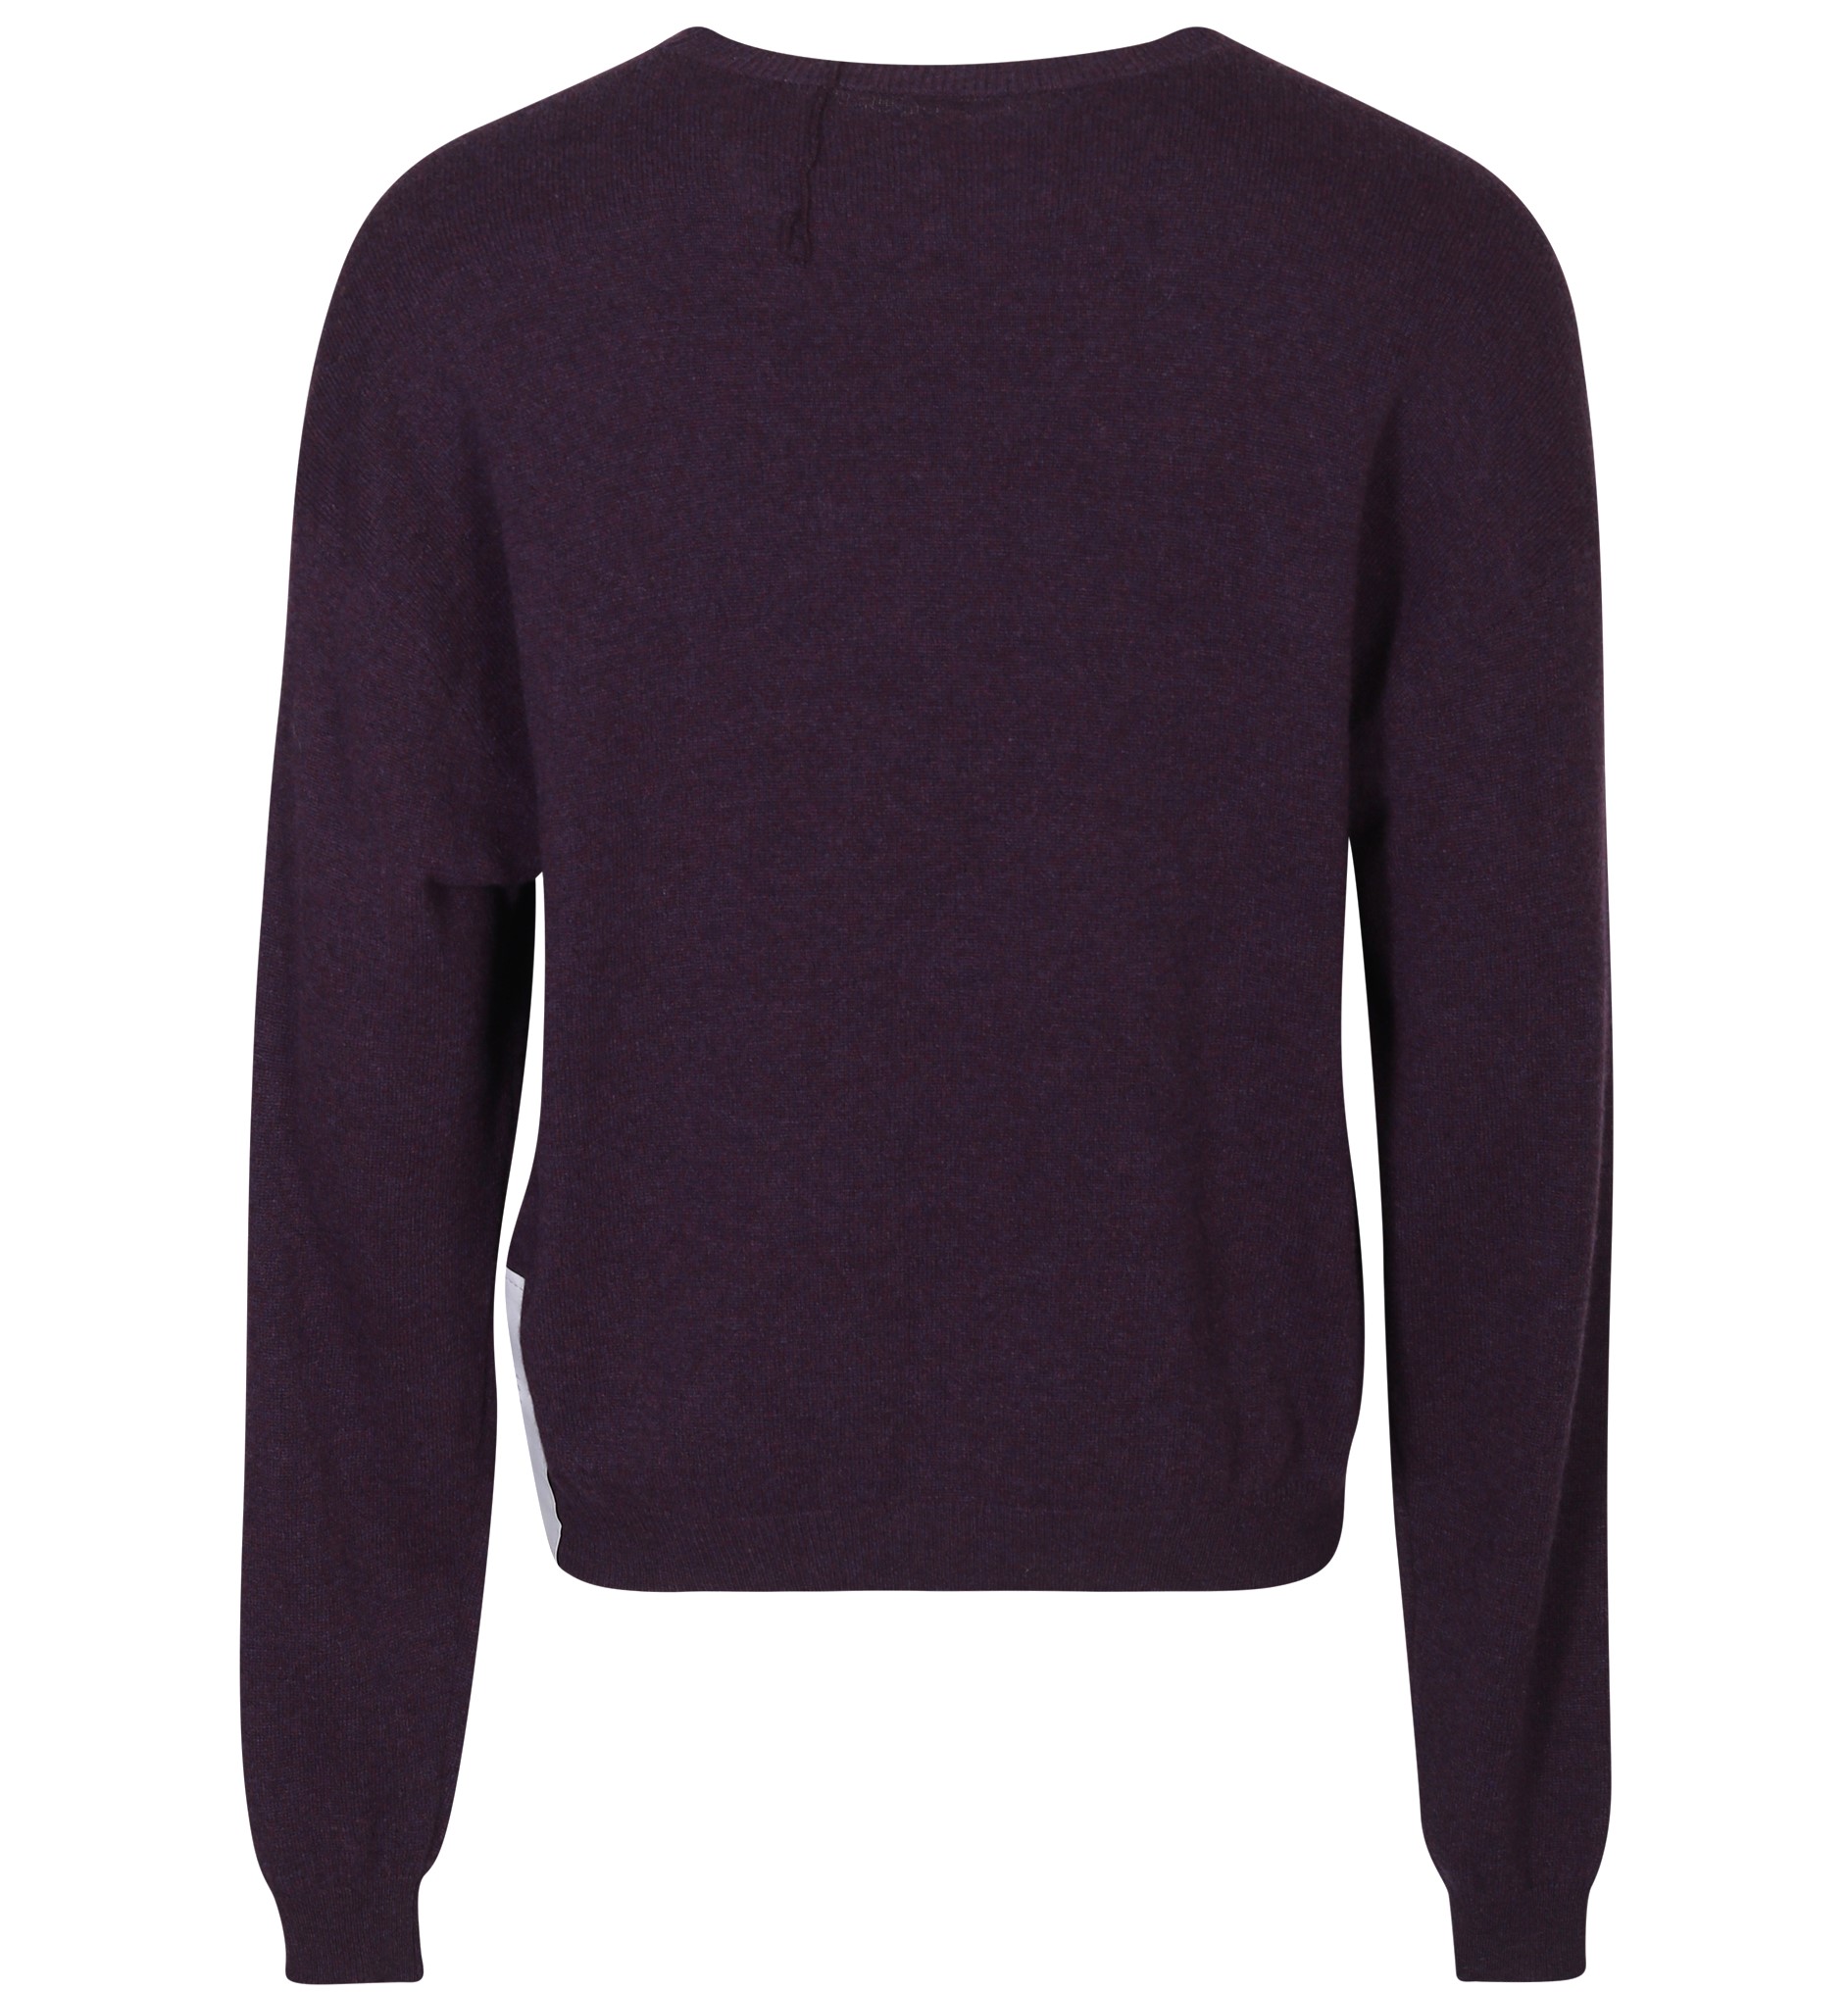 RAMAEL Infinity Cashmere Sweater in Aubergine XS